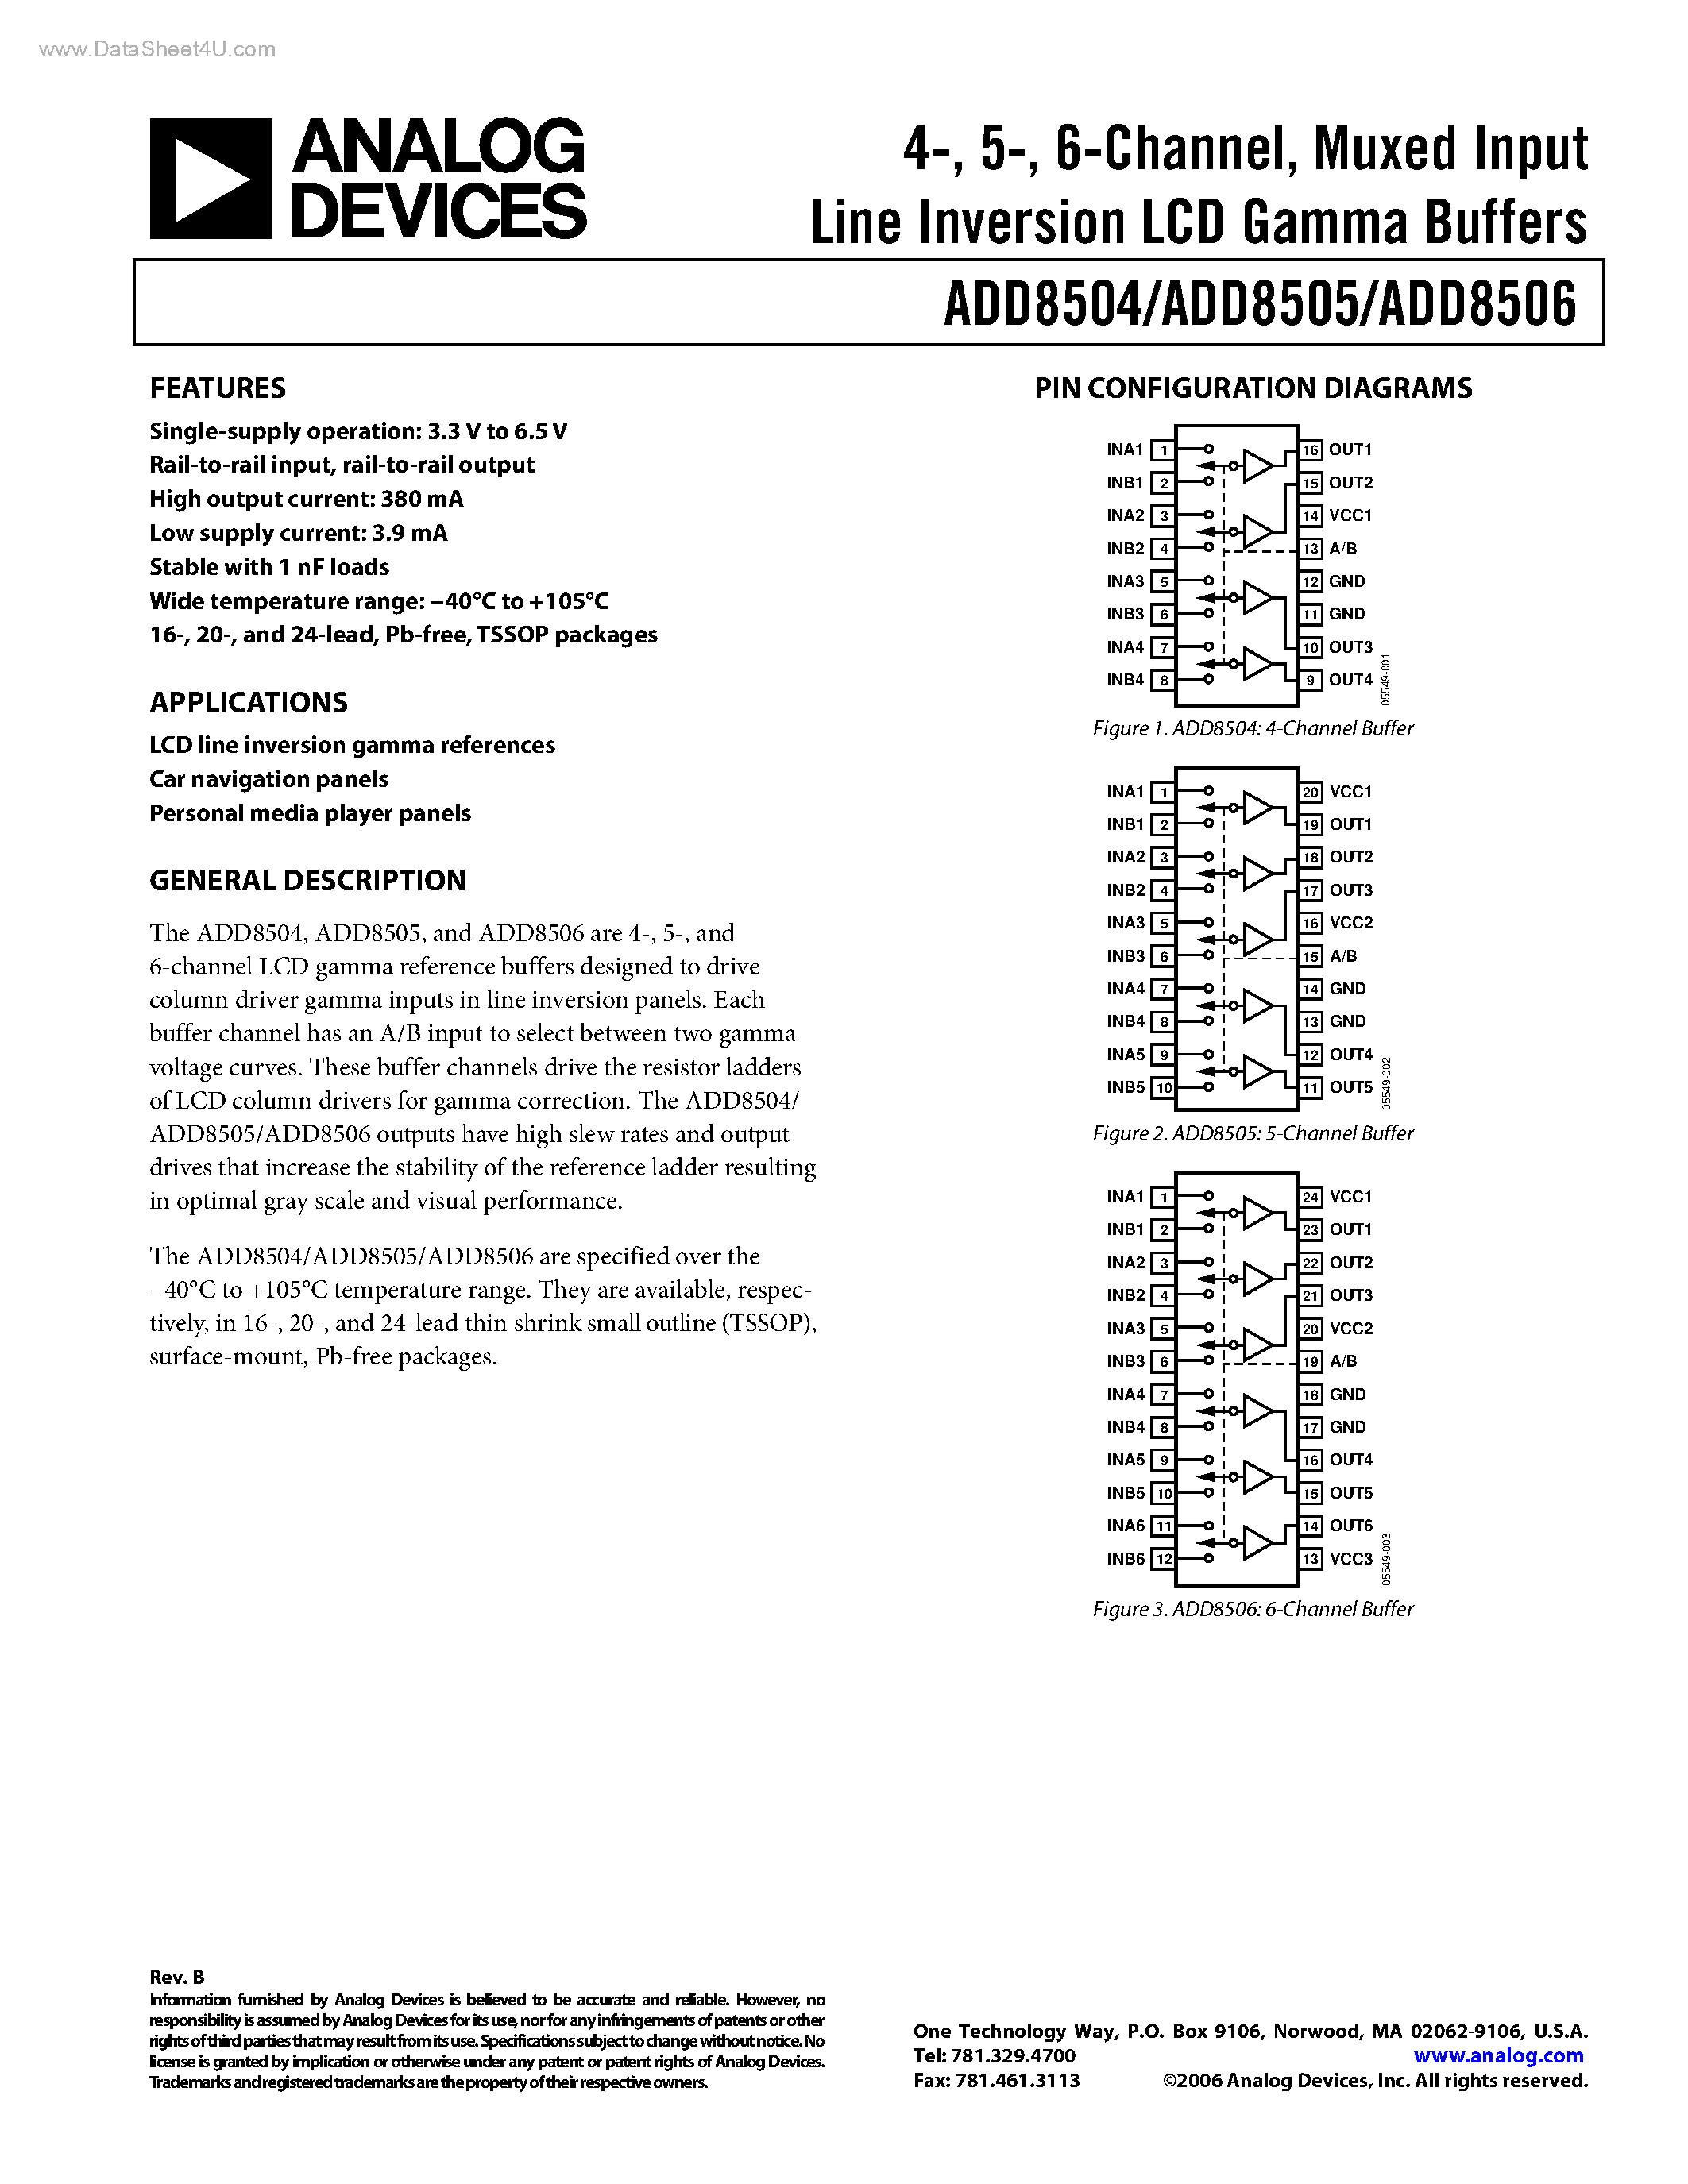 Даташит ADD8504 - (ADD8504 - ADD8506) Muxed Input Line Inversion LCD Gamma Buffers страница 1